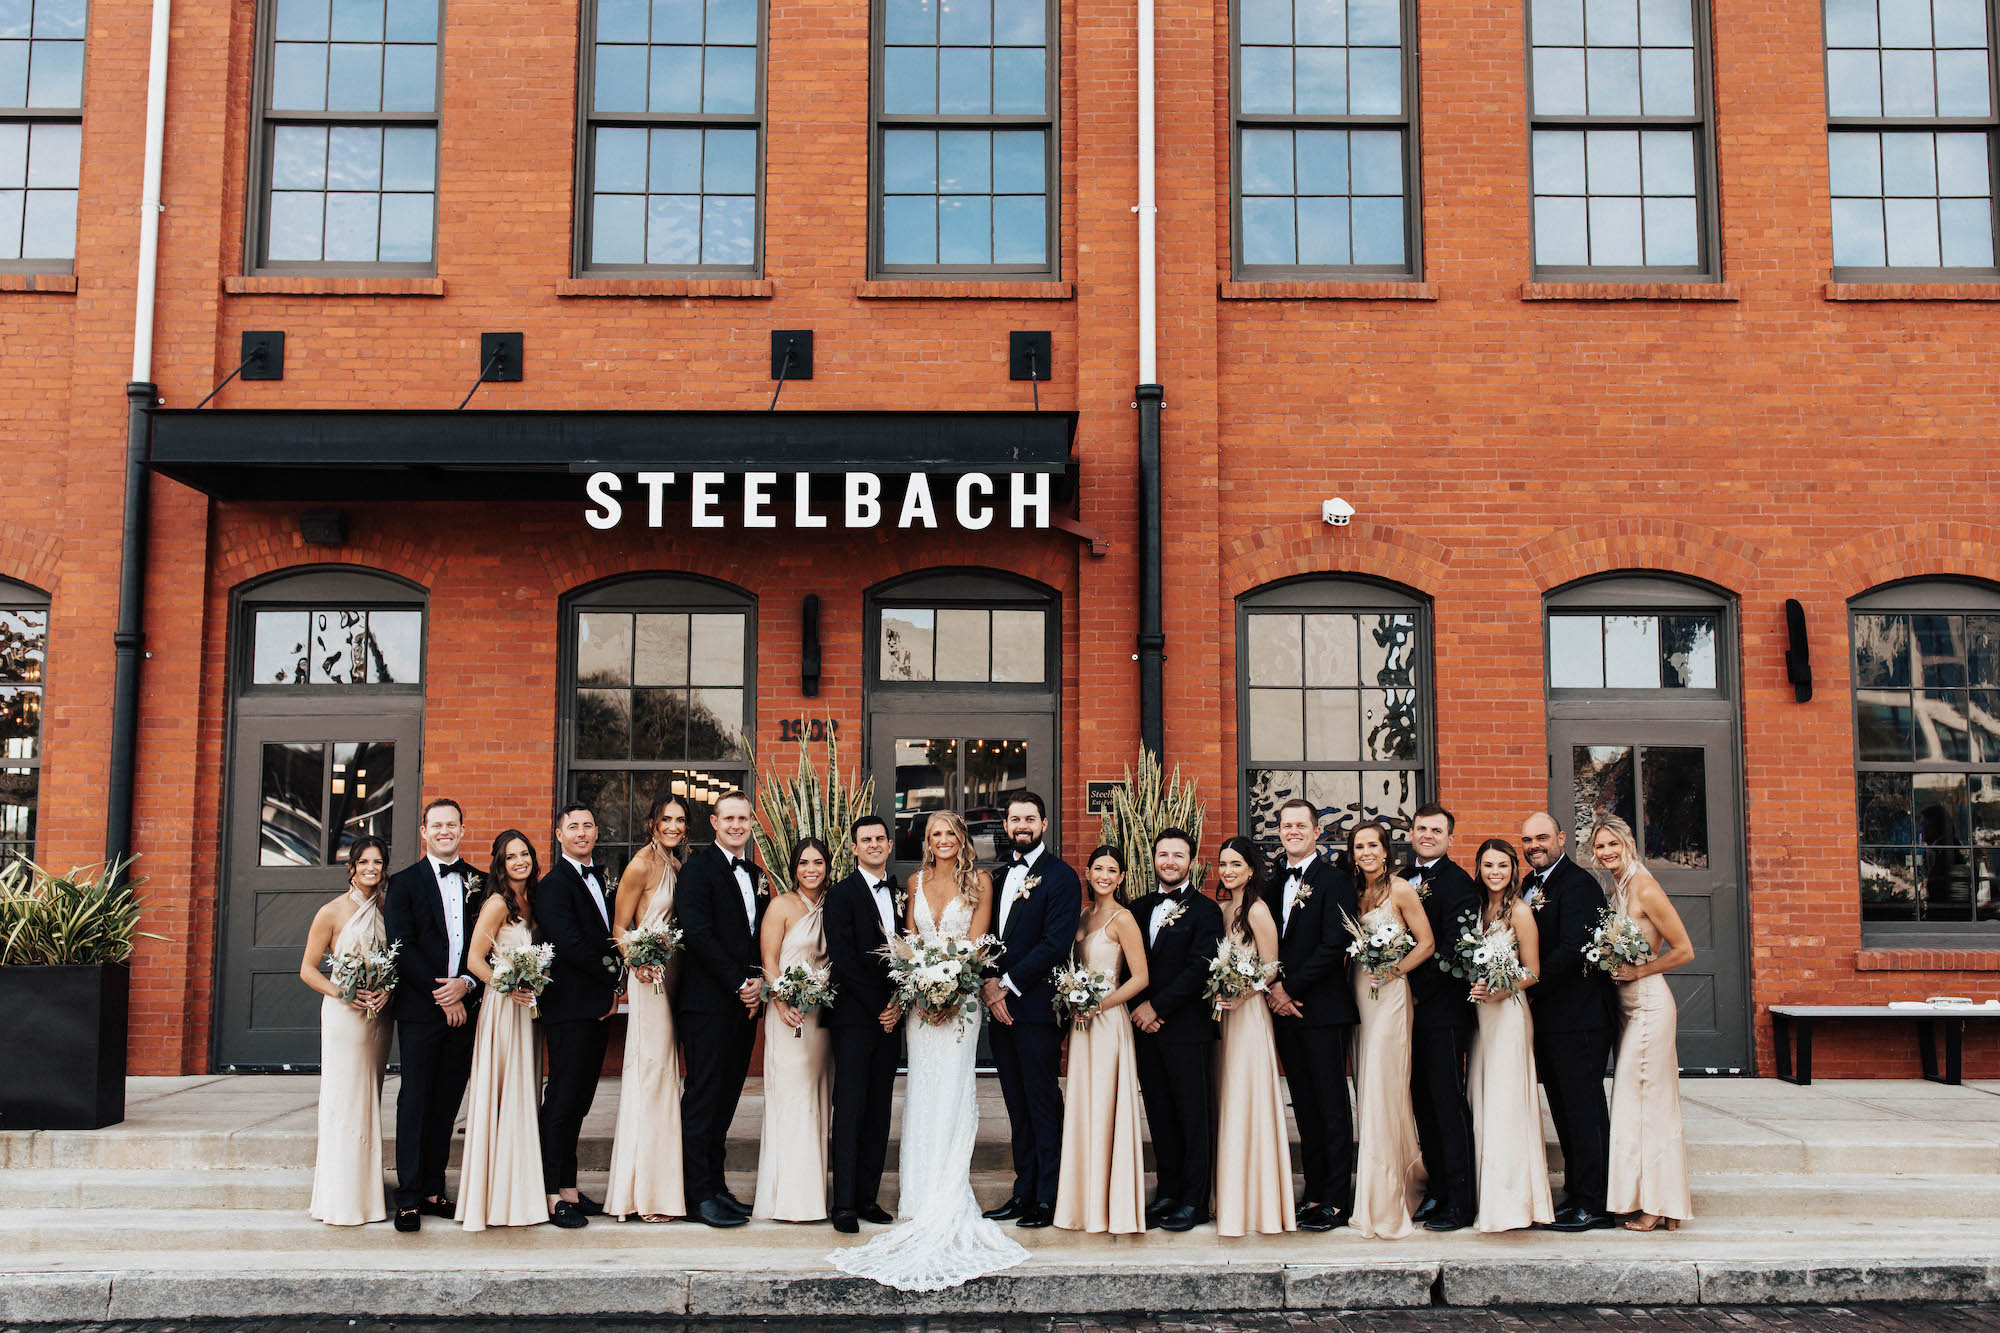 Black Tuxedo and Bowtie | Neutral Champagne Bridesmaid Dress Ideas | Tampa Bay Industrial Wedding Venue Ideas